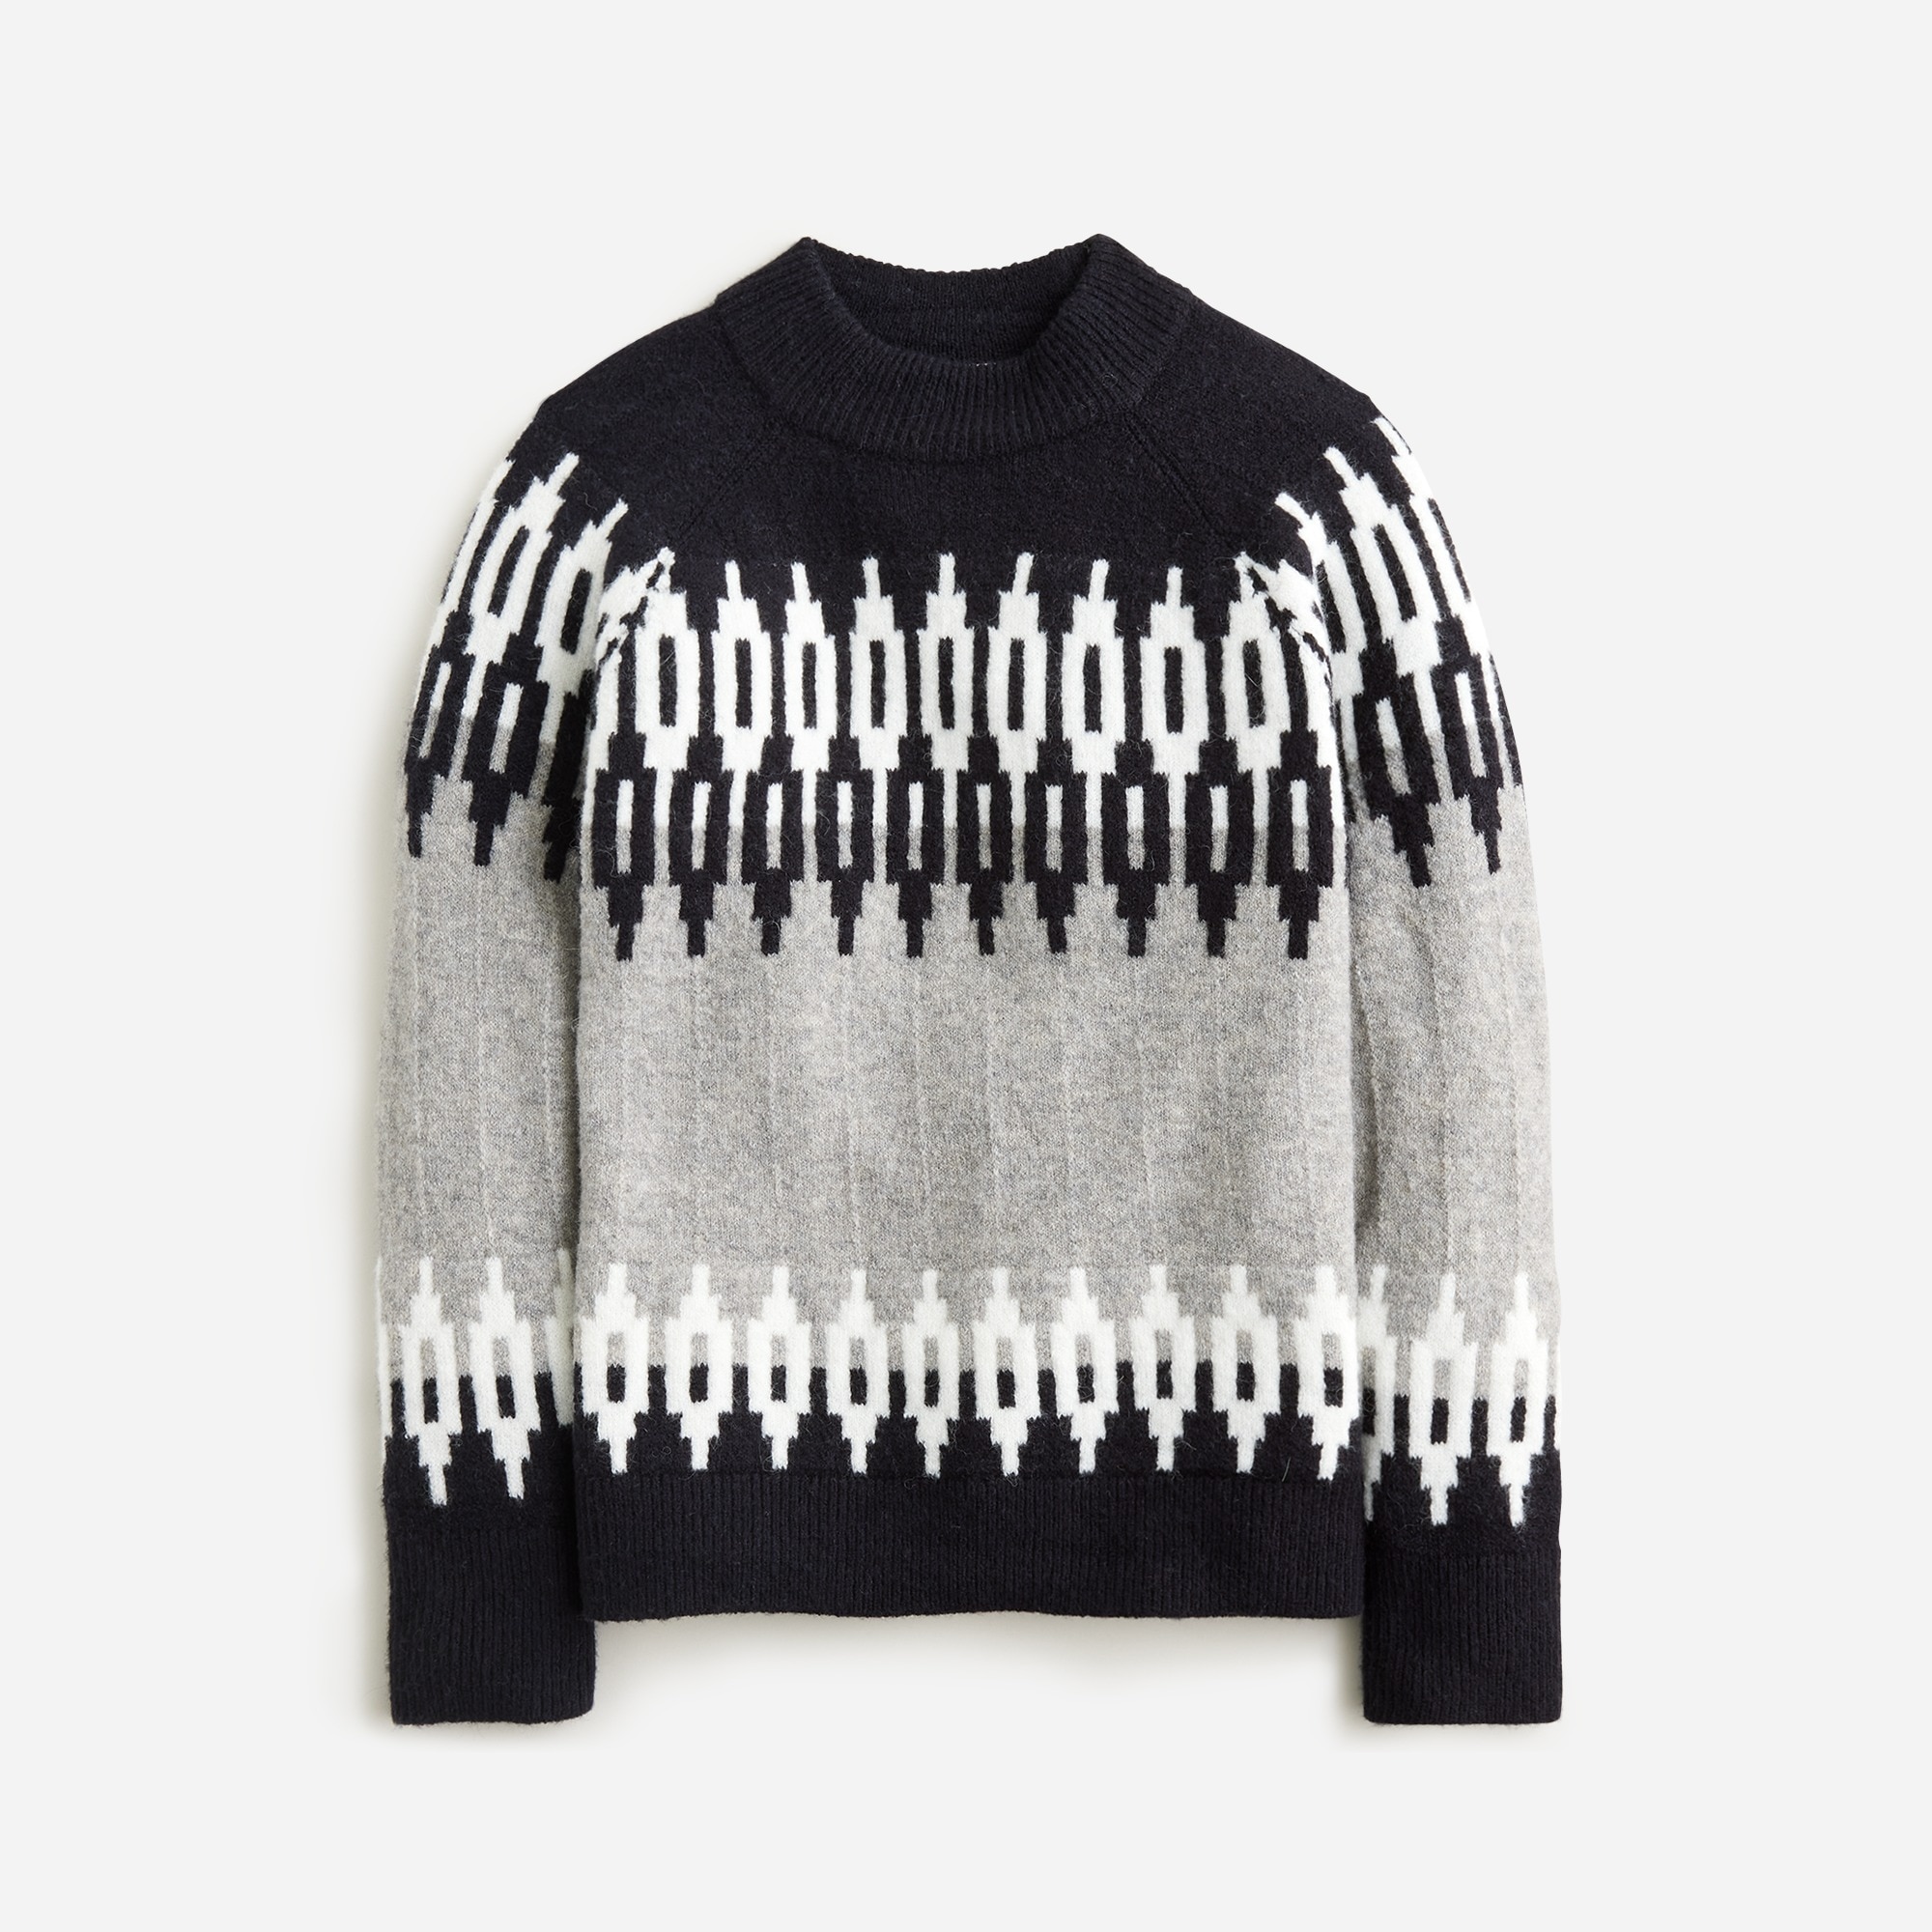  Girls' diamond Fair Isle mockneck sweater in supersoft yarn